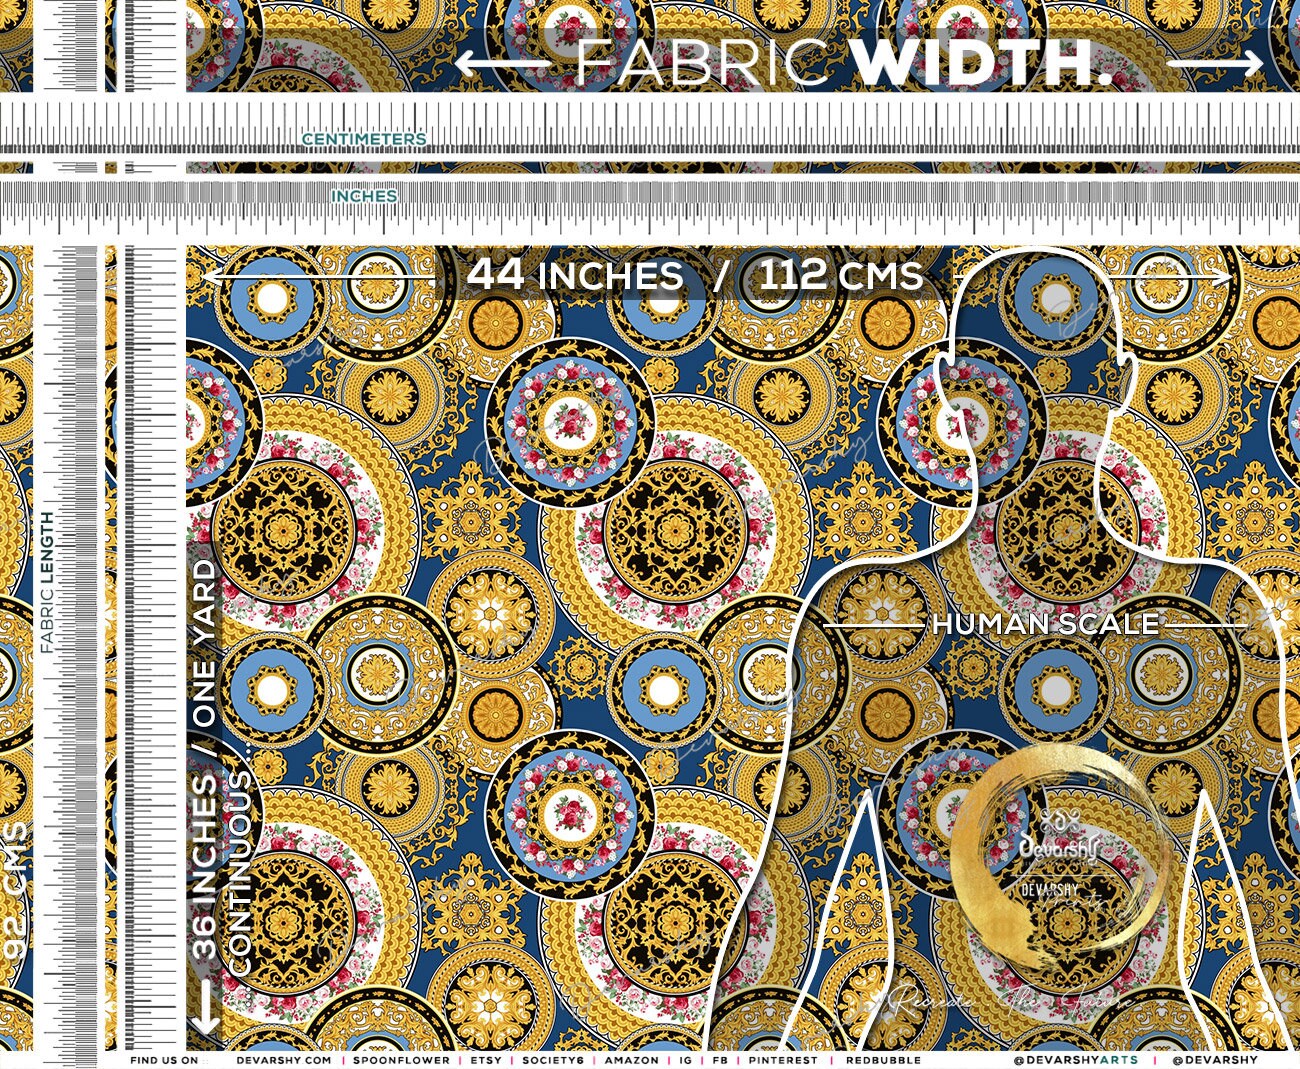 BAROQUE Circles 3meters Apparel Fabrics 8 Fabric Options 18 